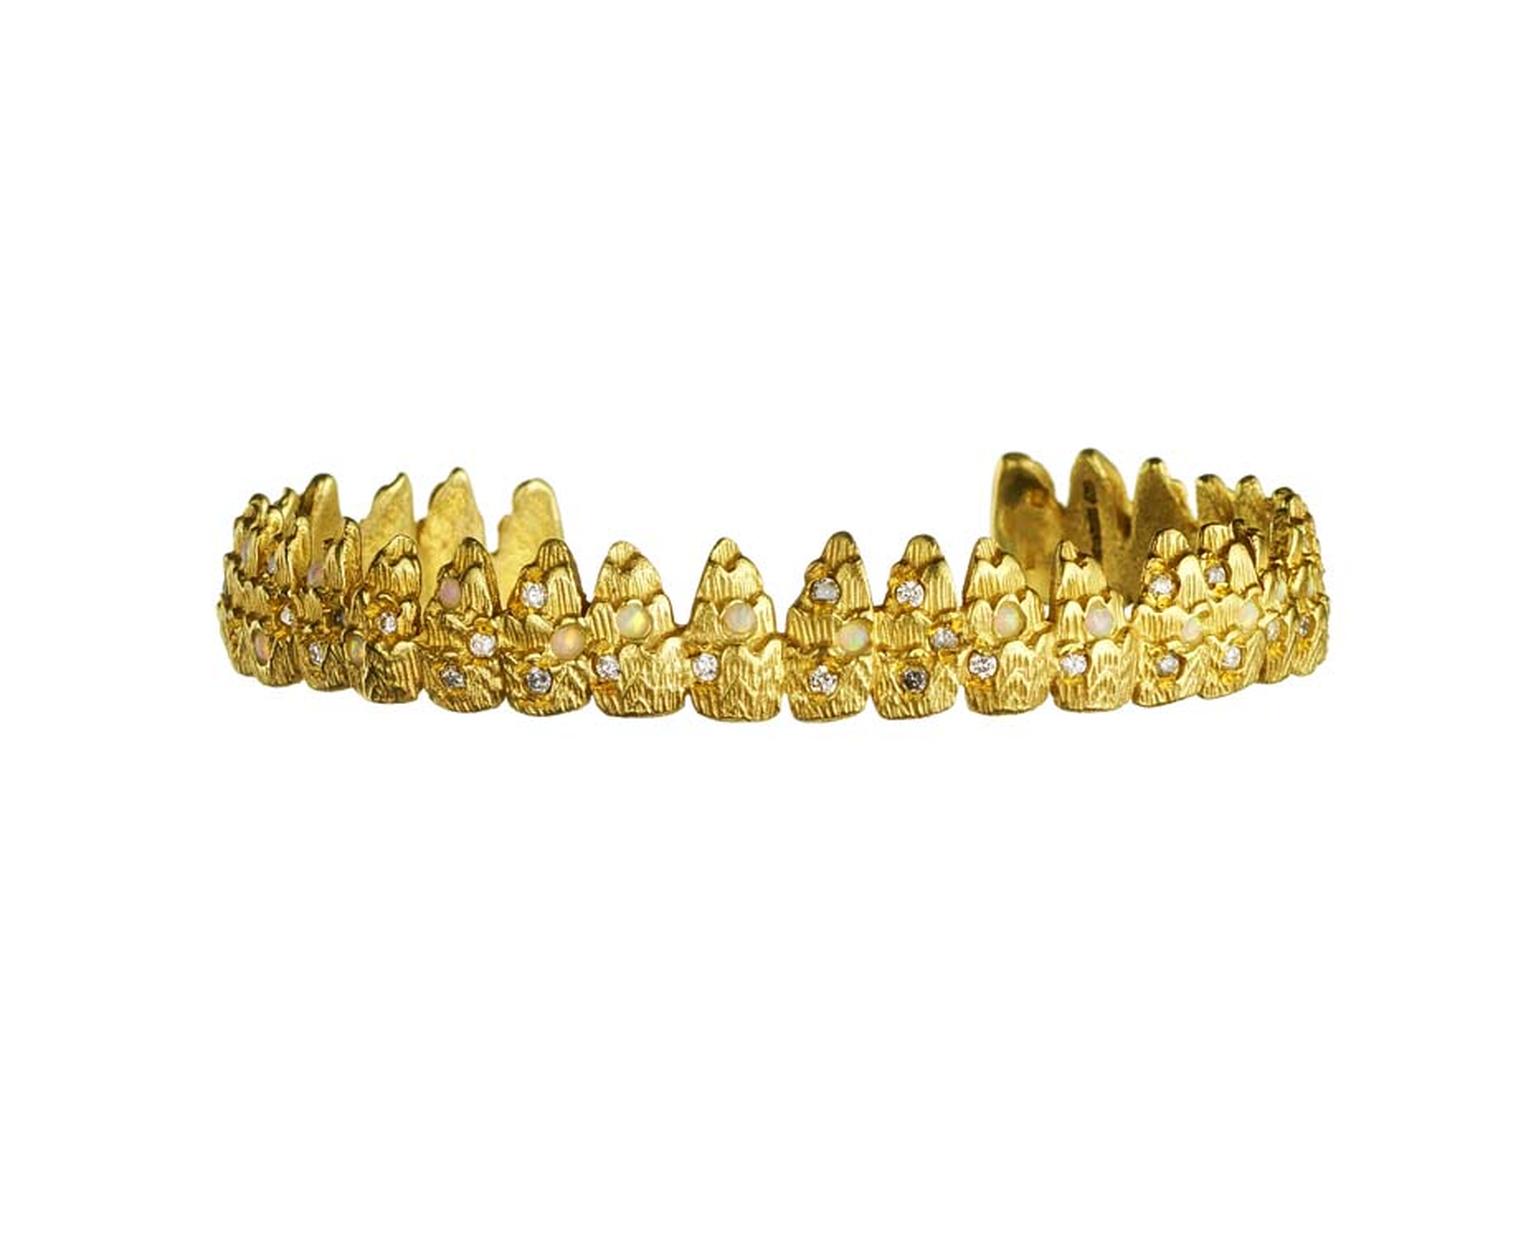 Carolina Bucci textured gold bracelet with diamonds and opals.